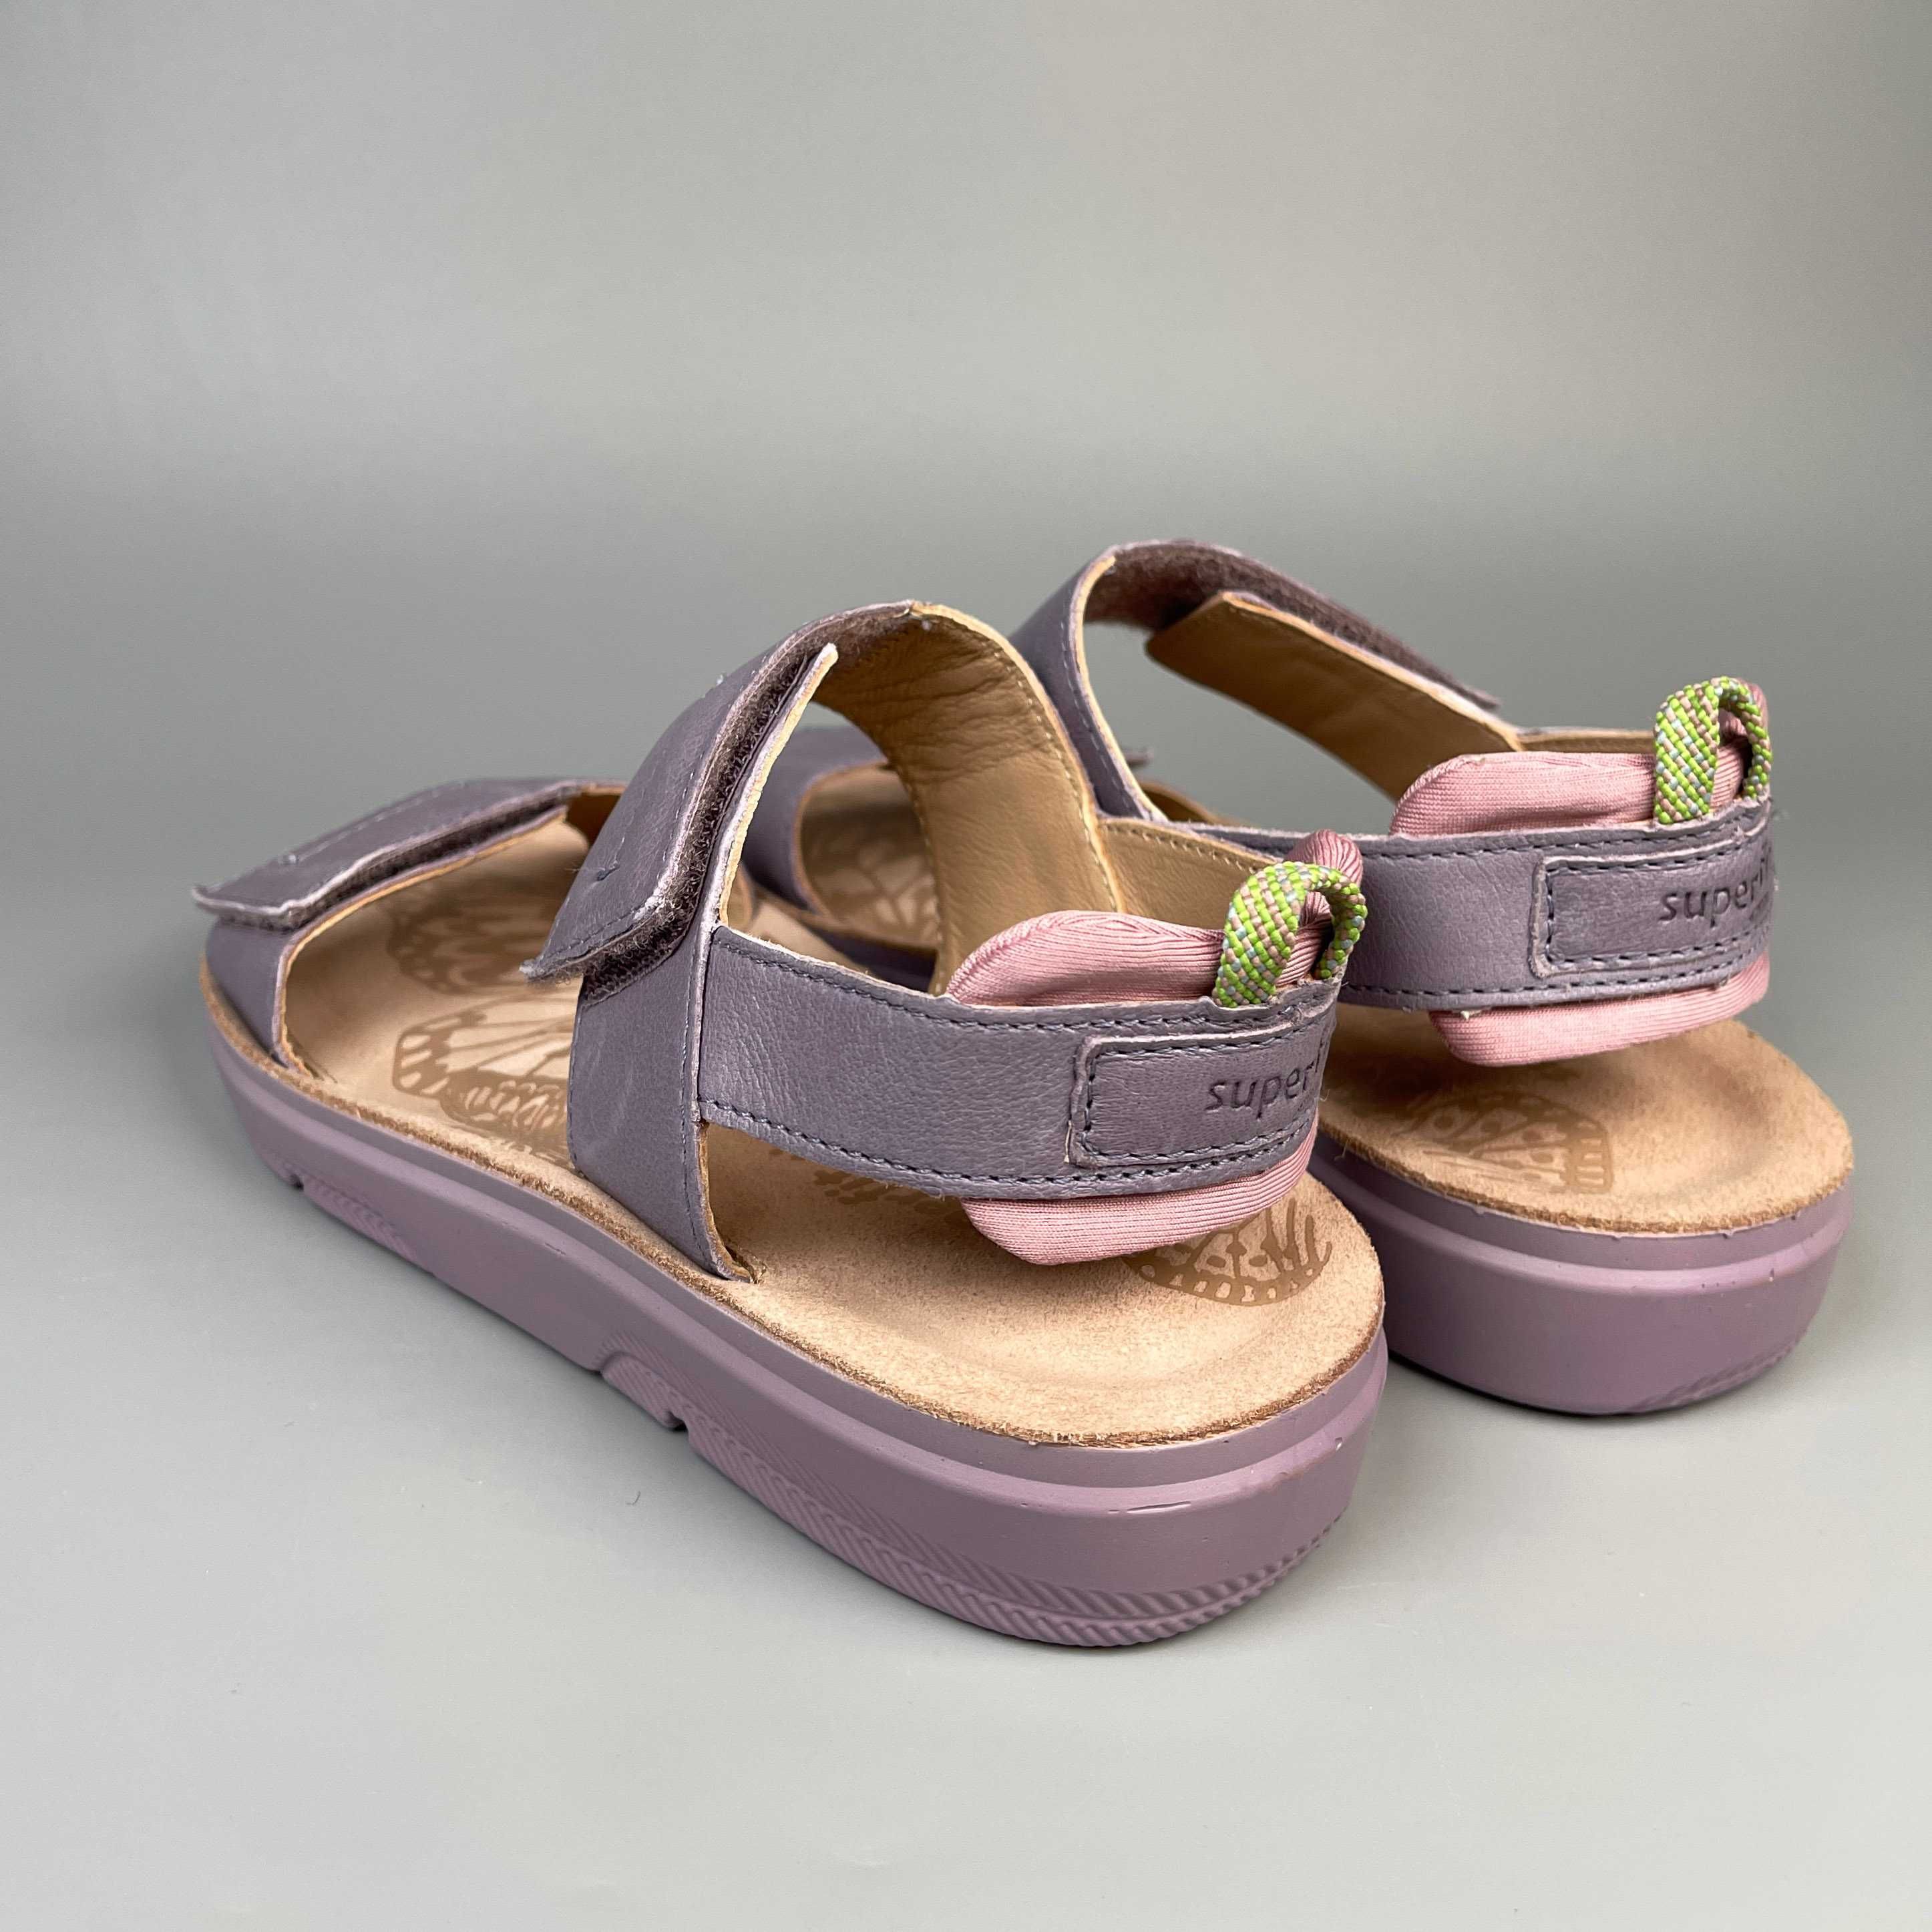 Босоніжки Superfit Paloma 35, 37 р. босоножки сандали